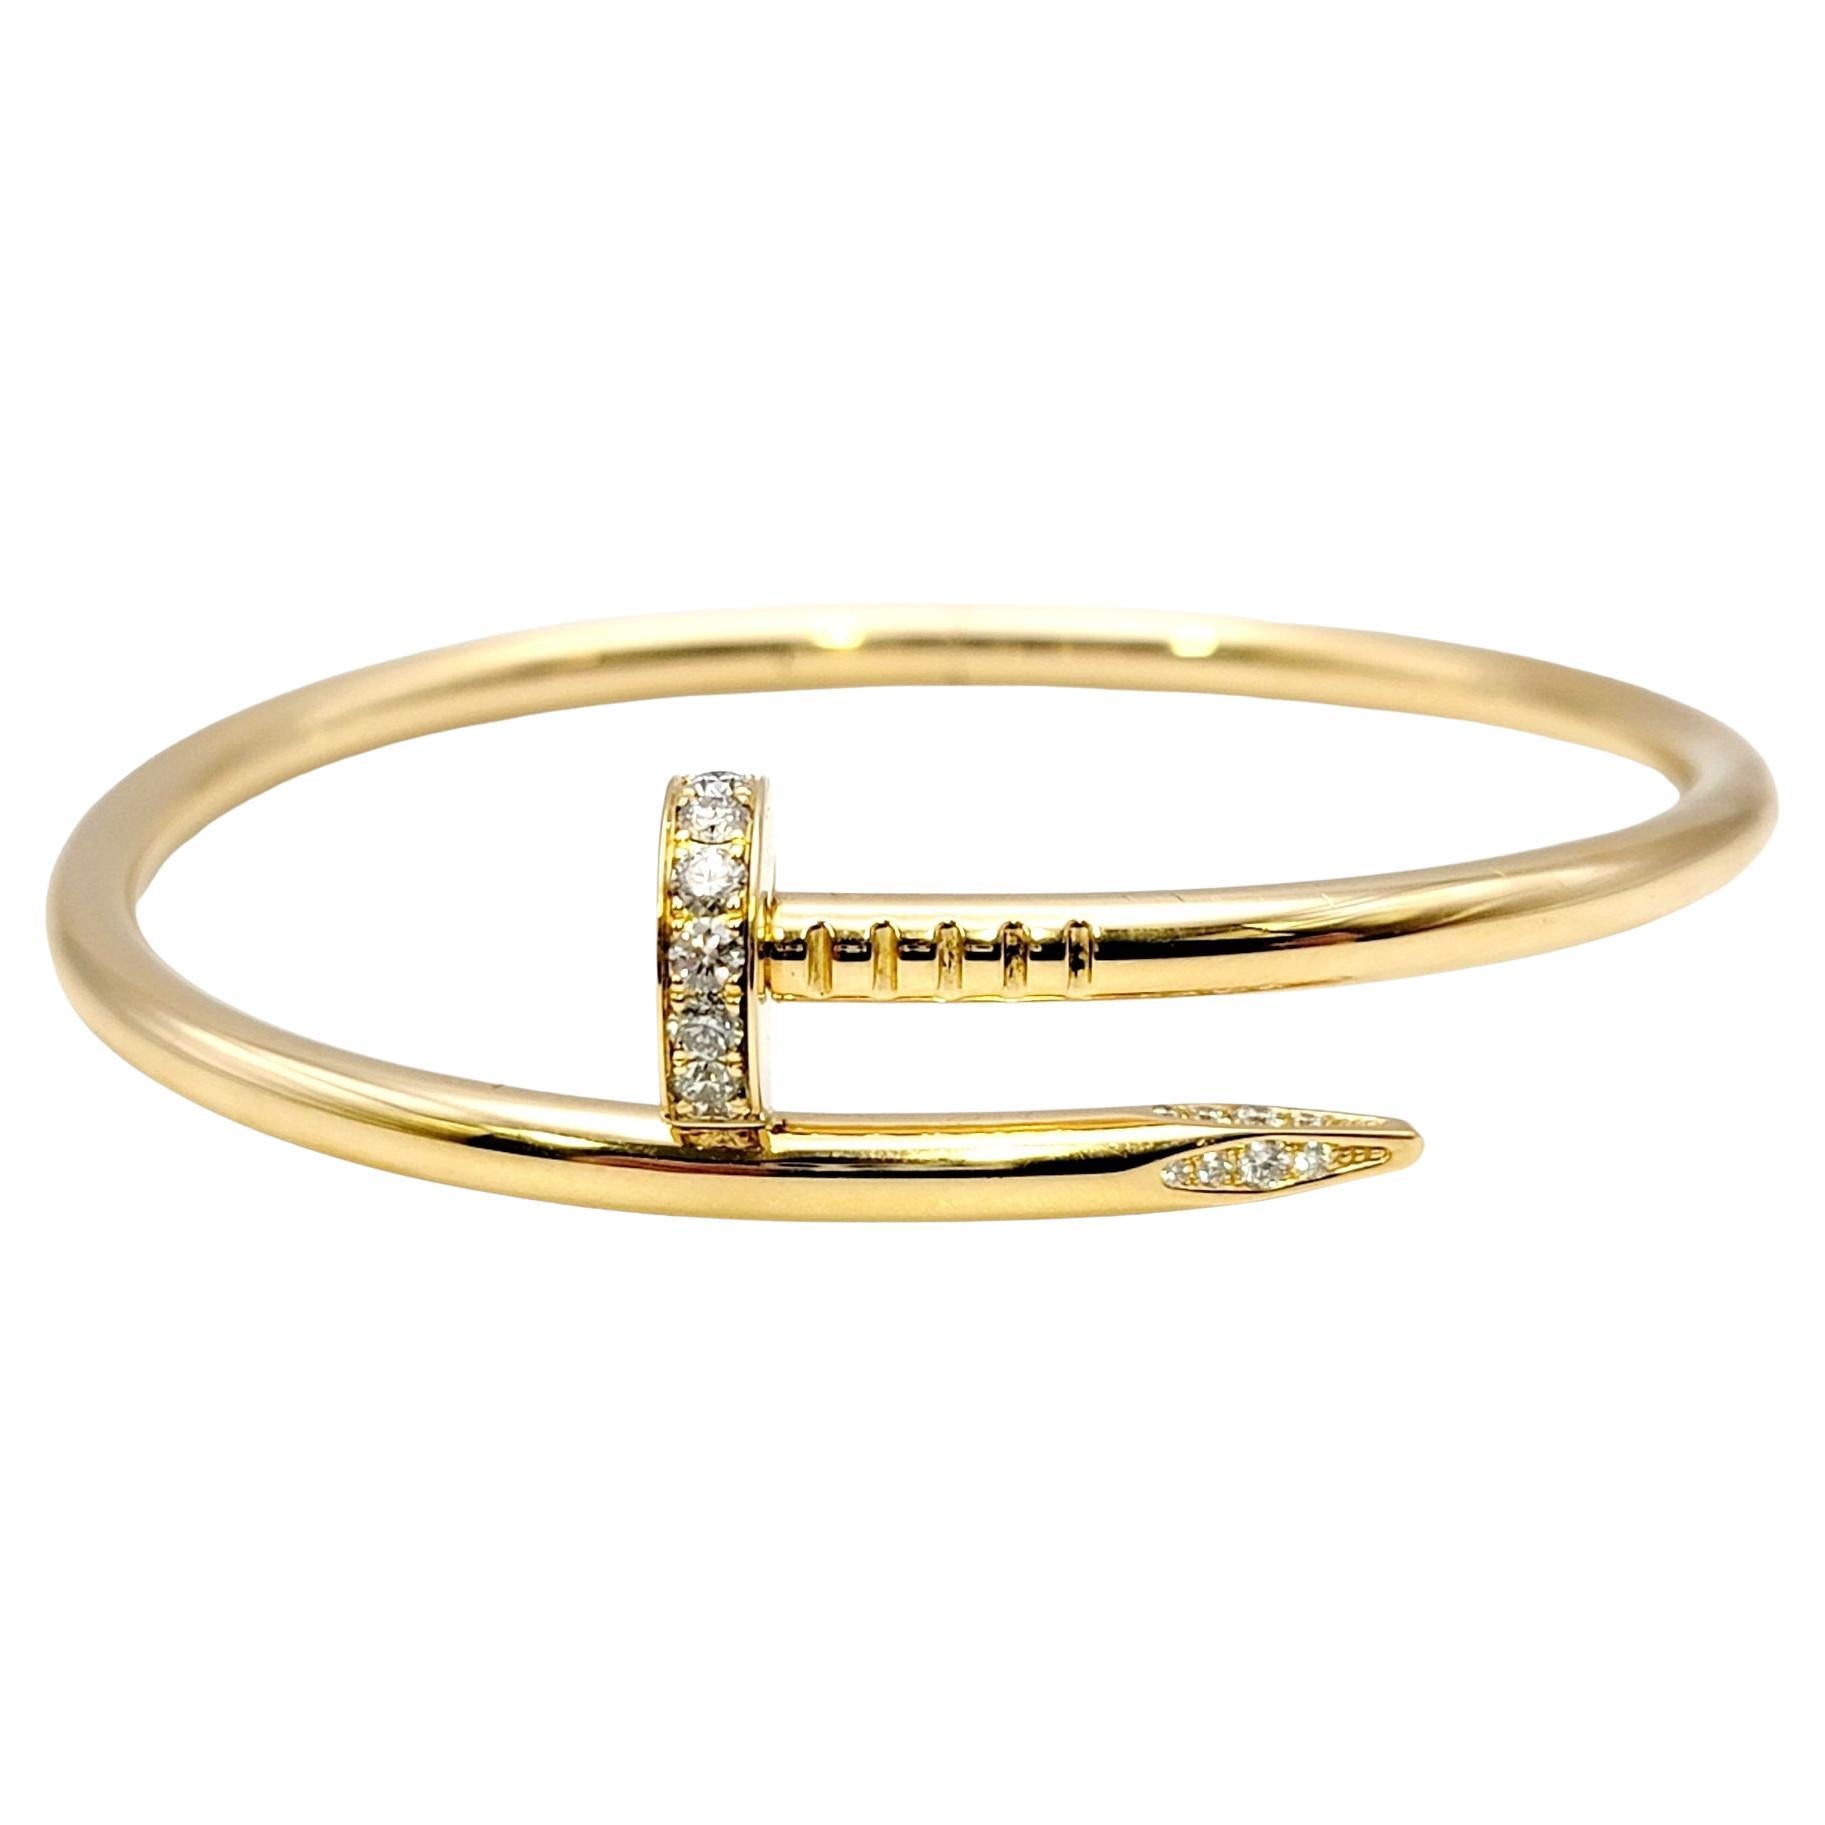 Cartier Juste un Clou Yellow Gold Hinged Bangle Bracelet with Diamonds